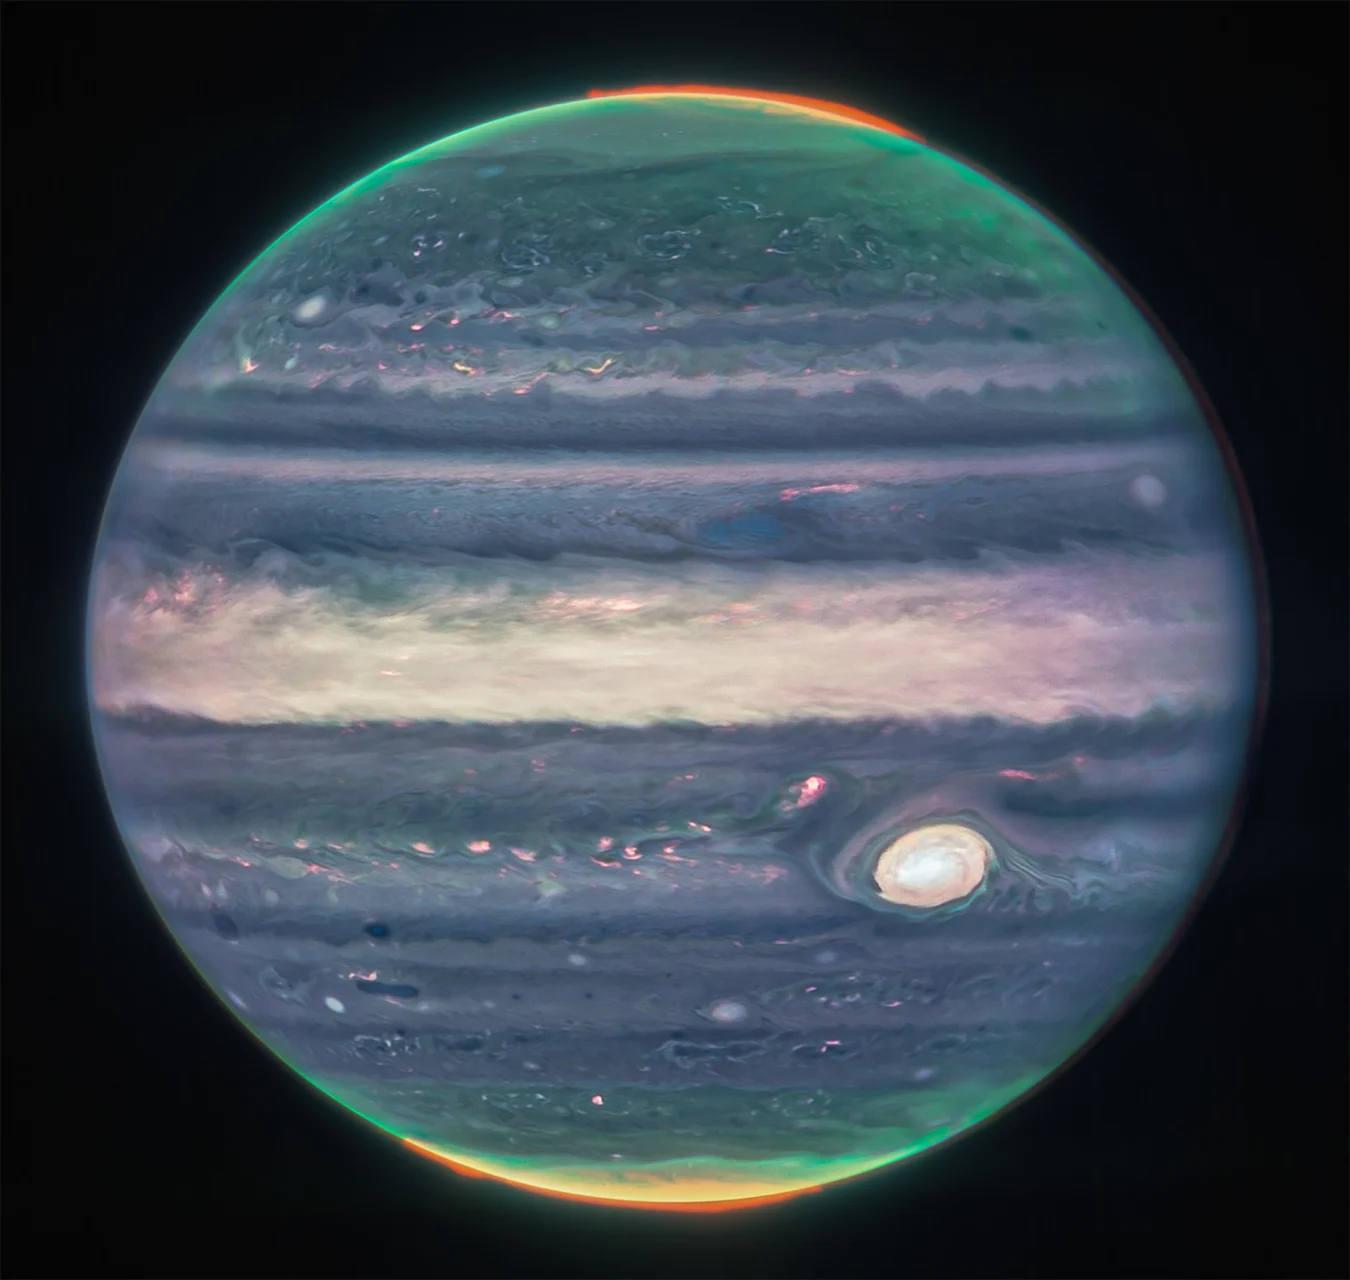 Jupiter auroras captured by James Webb Space Telescope